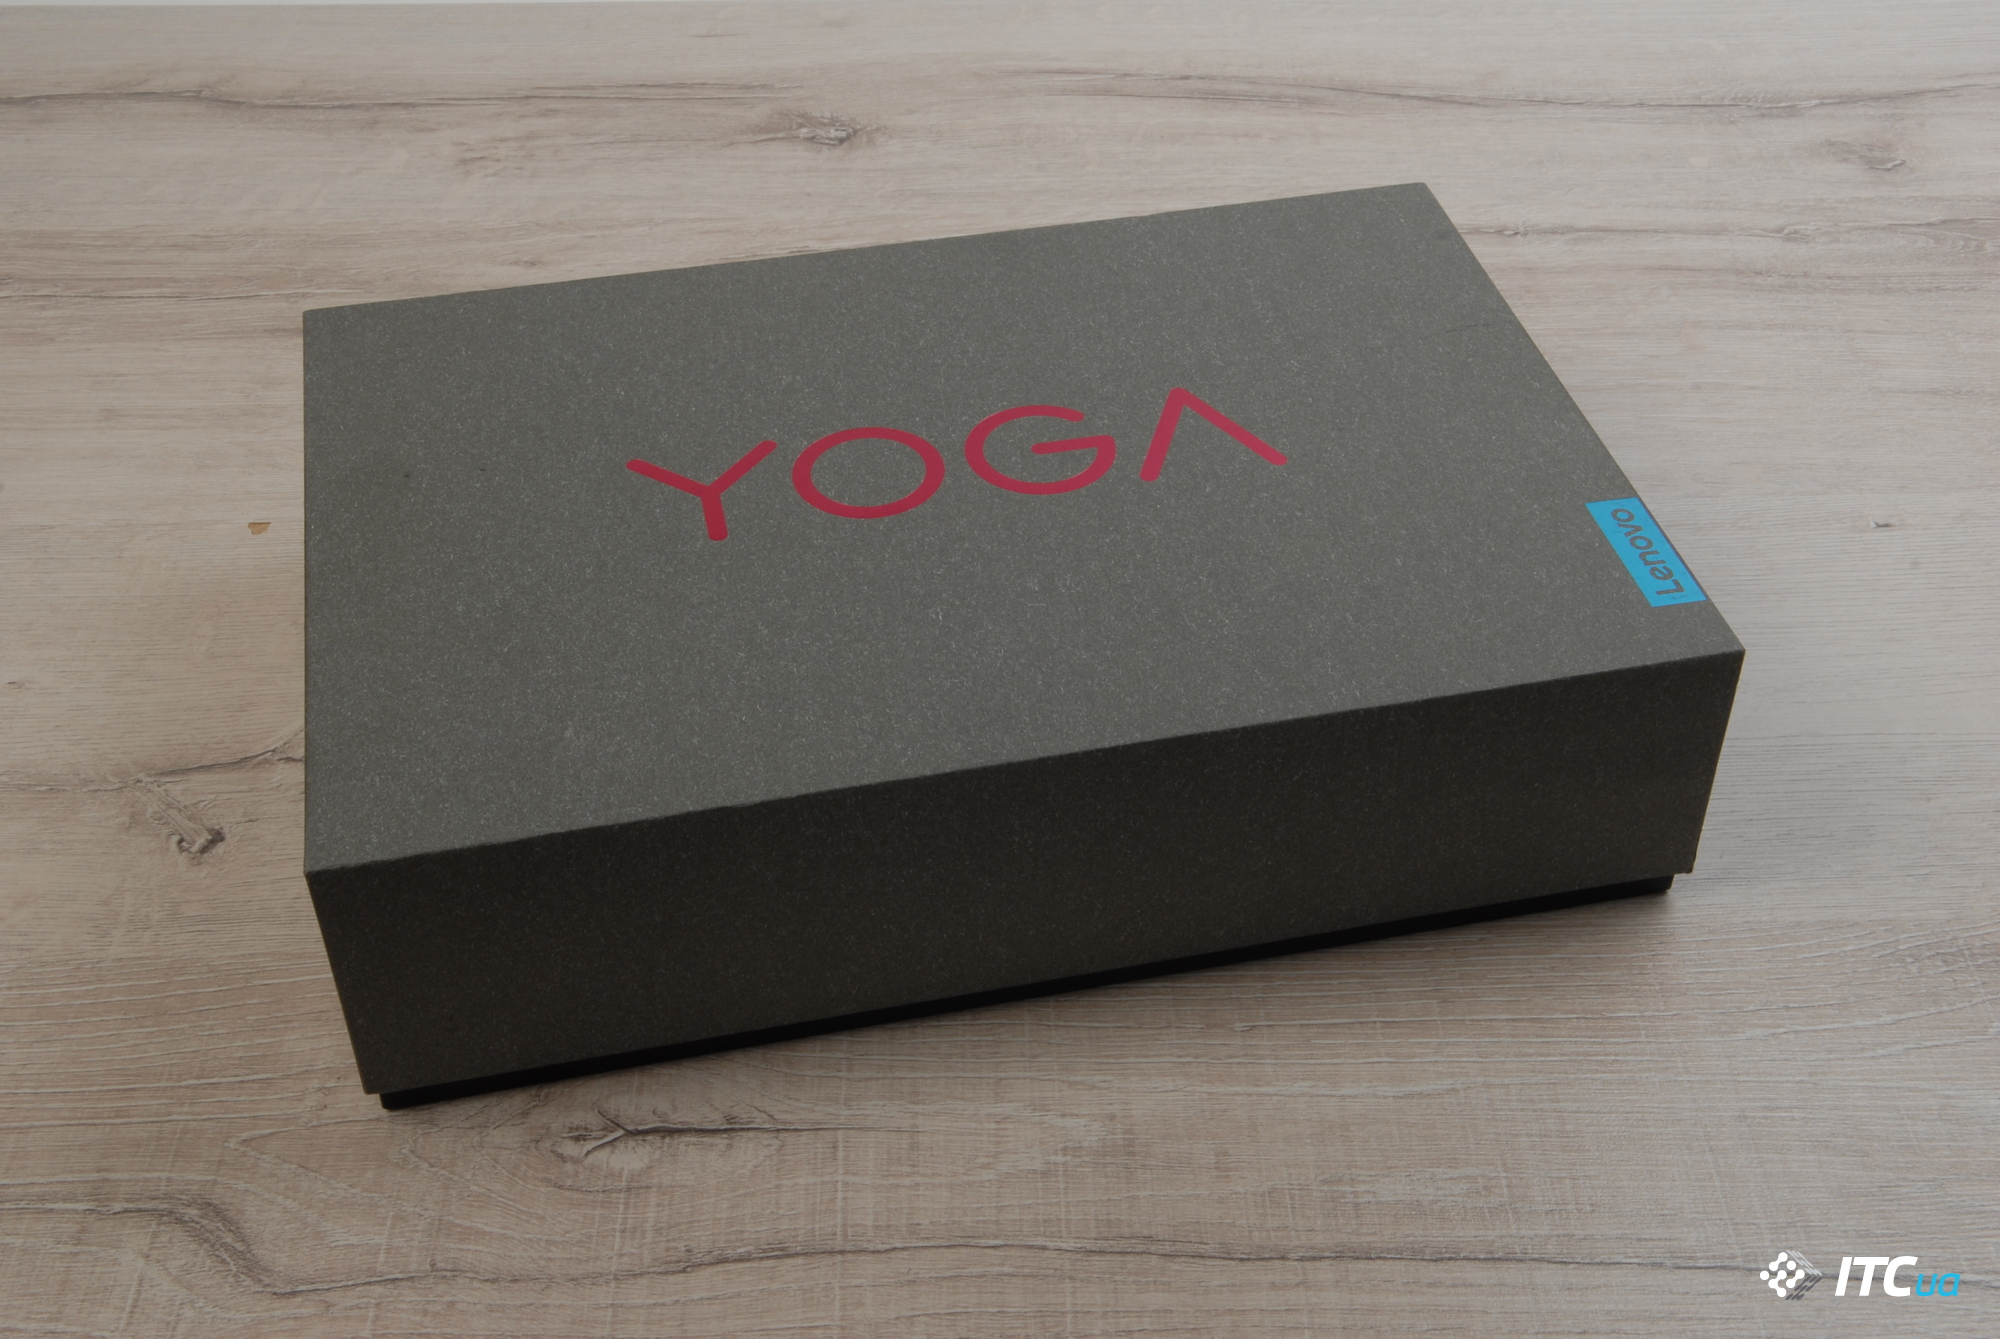 Обзор Lenovo Yoga 920